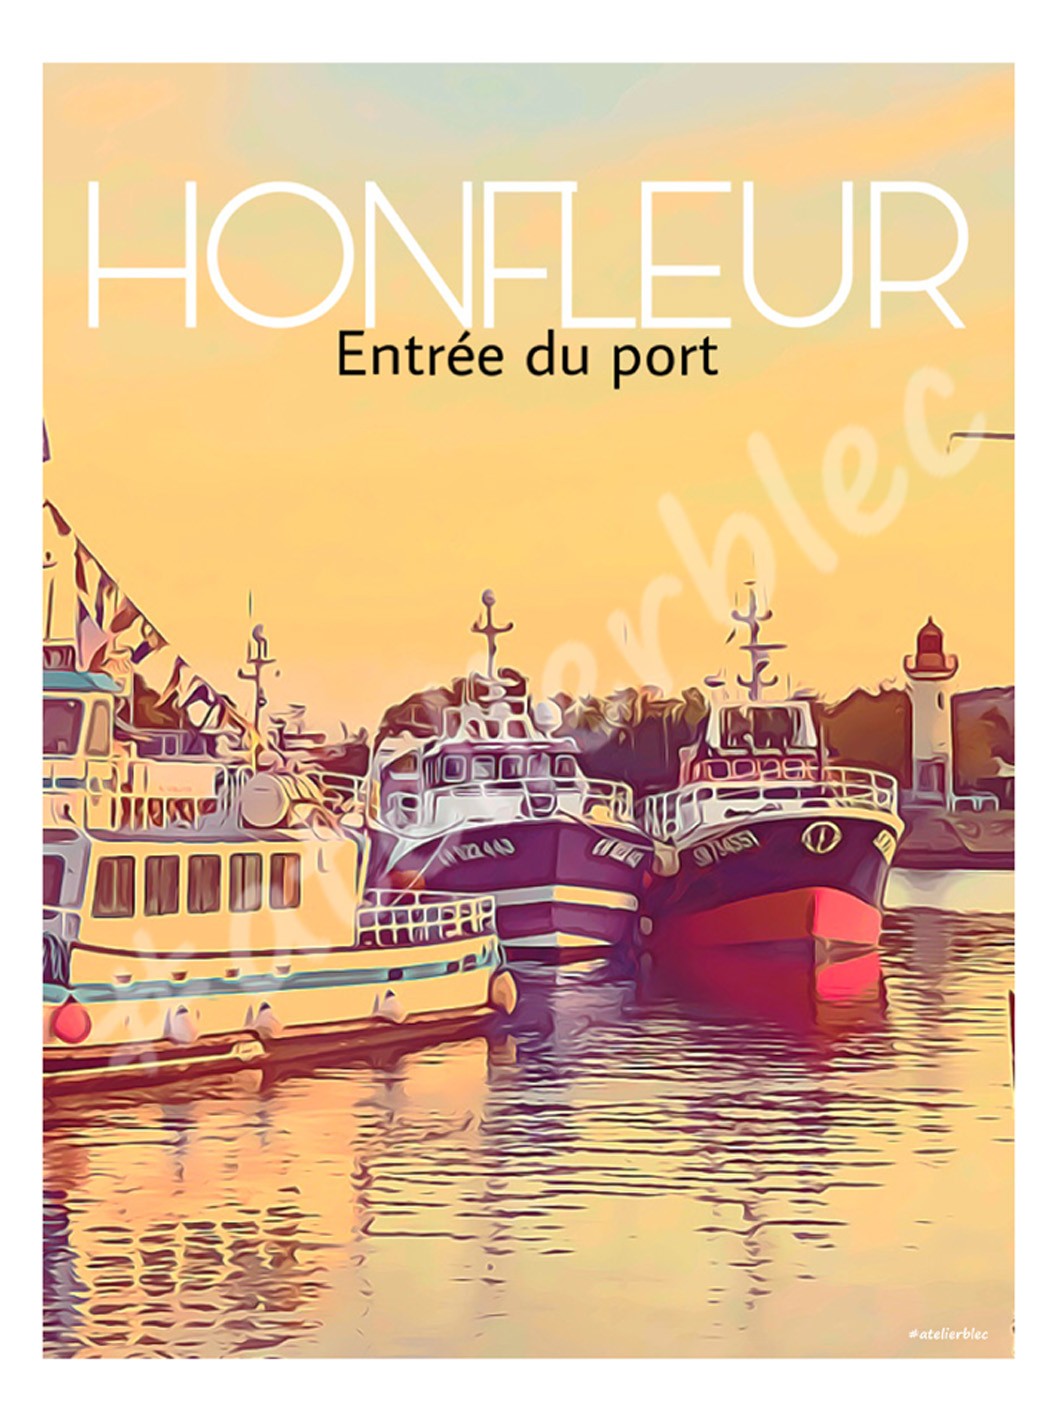 Honfleur9 entree du port